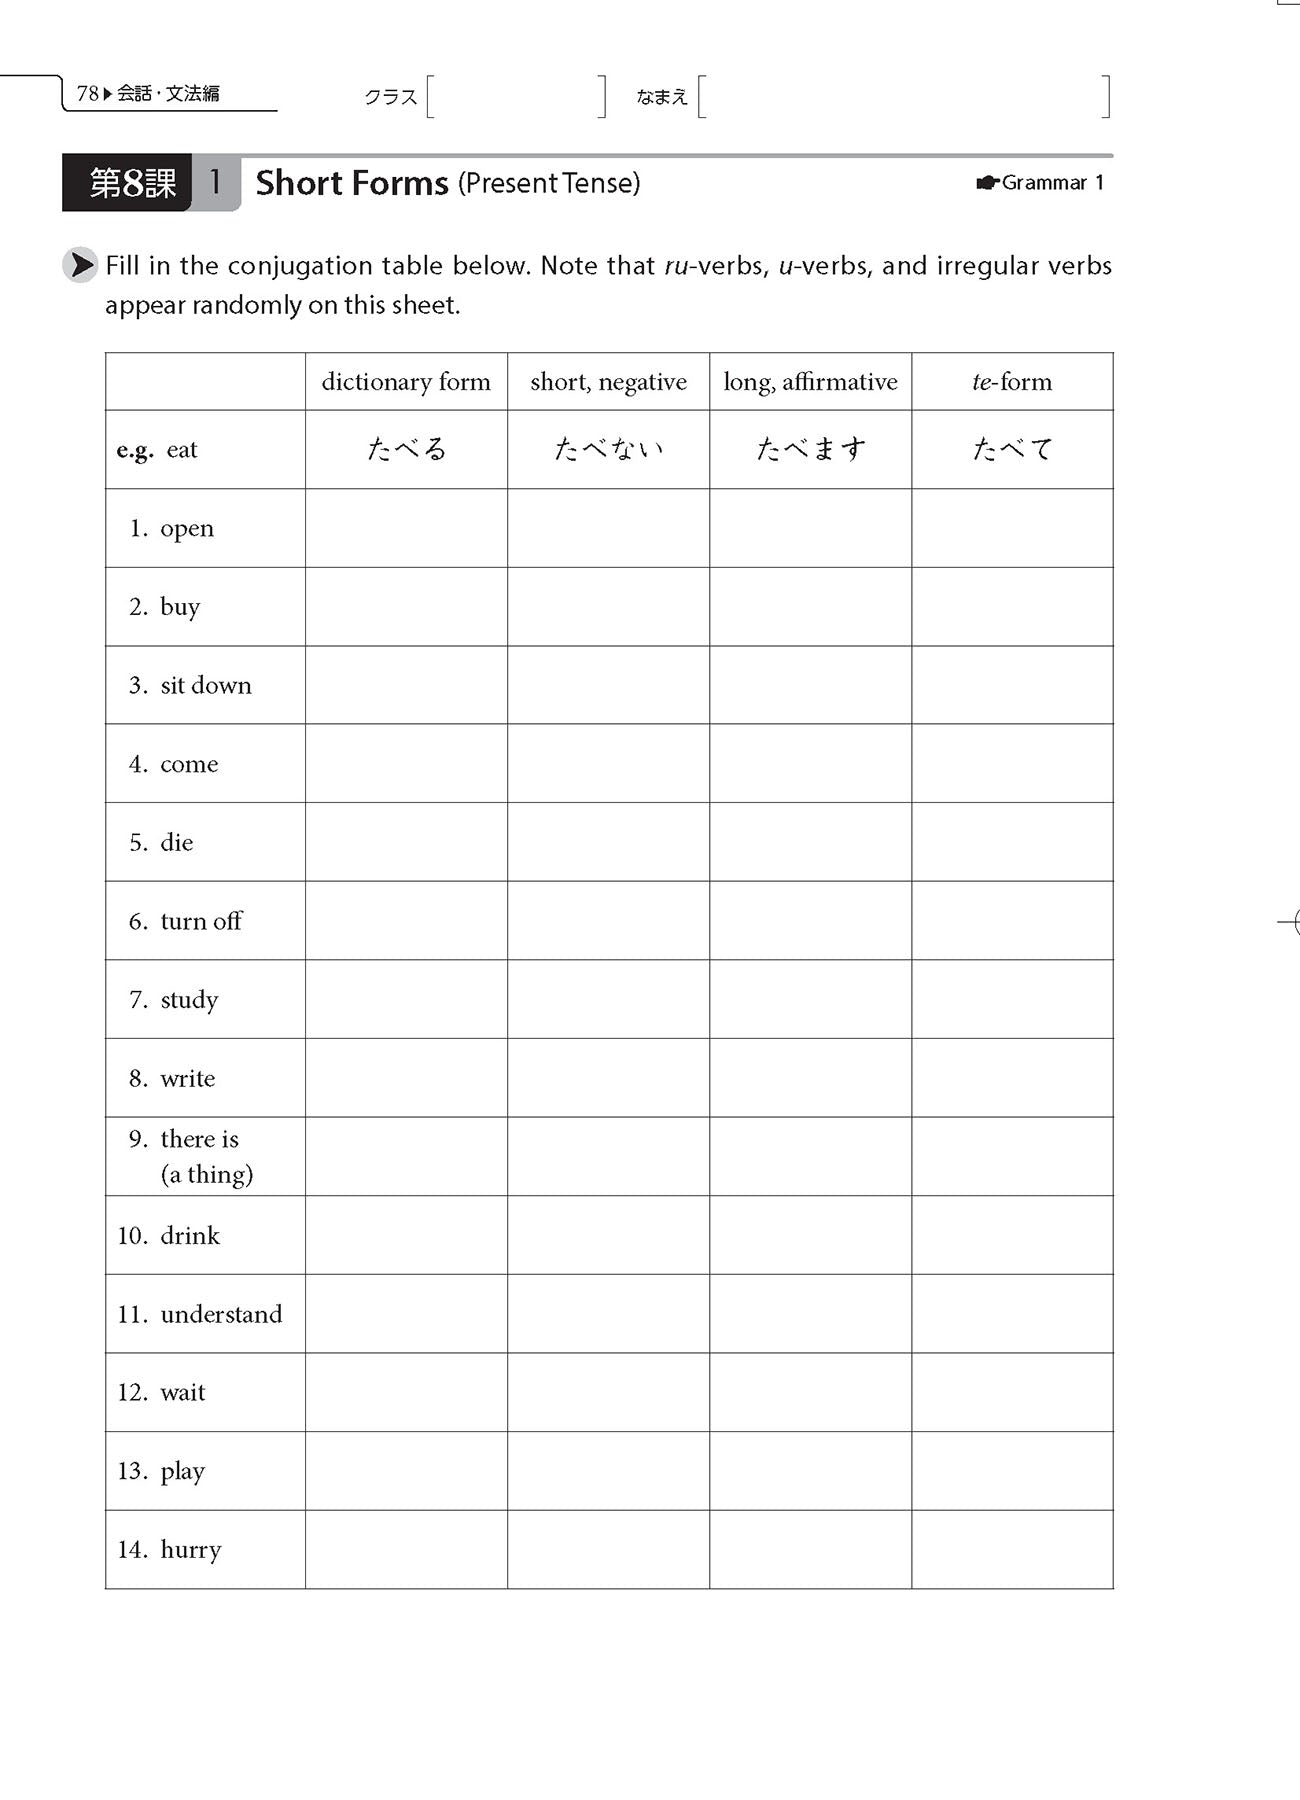 Genki Workbook 2 - Sample Page 2